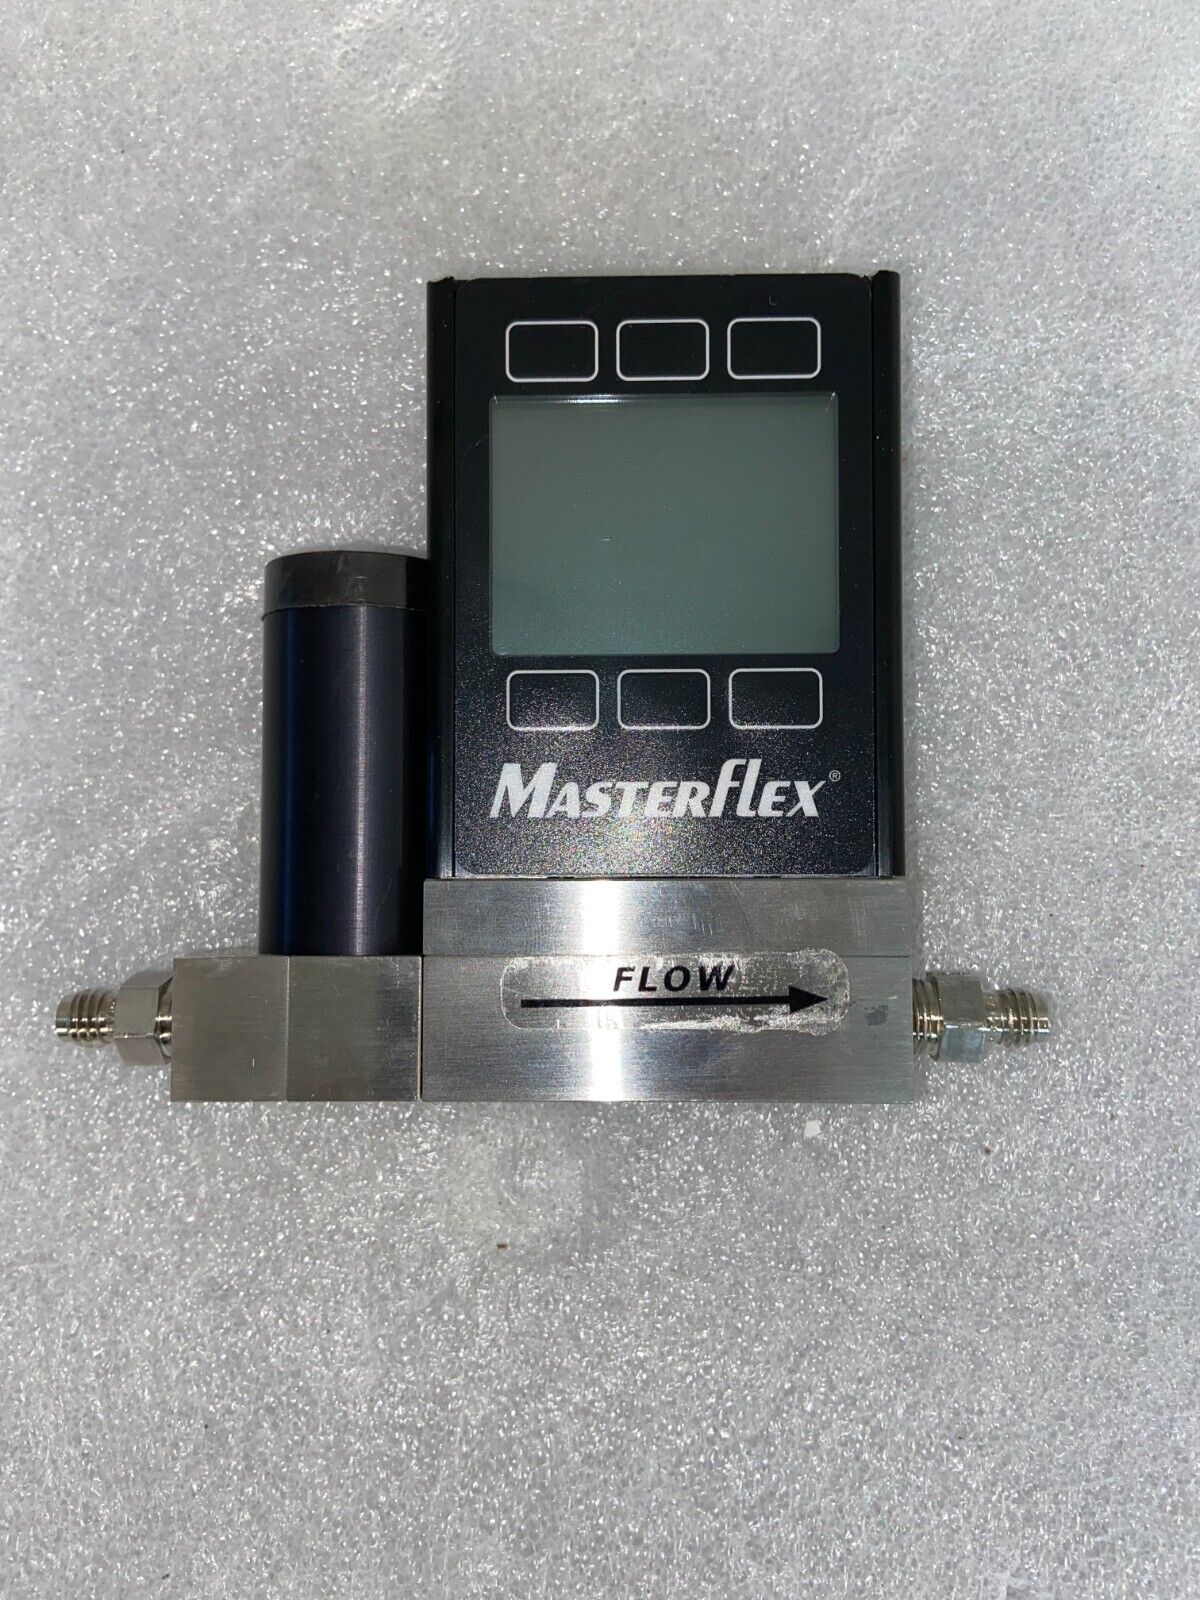 *NEW* Masterflex 32907-67 Gas Mass Flow Controller, 10 to 1000 ml/min, NIST